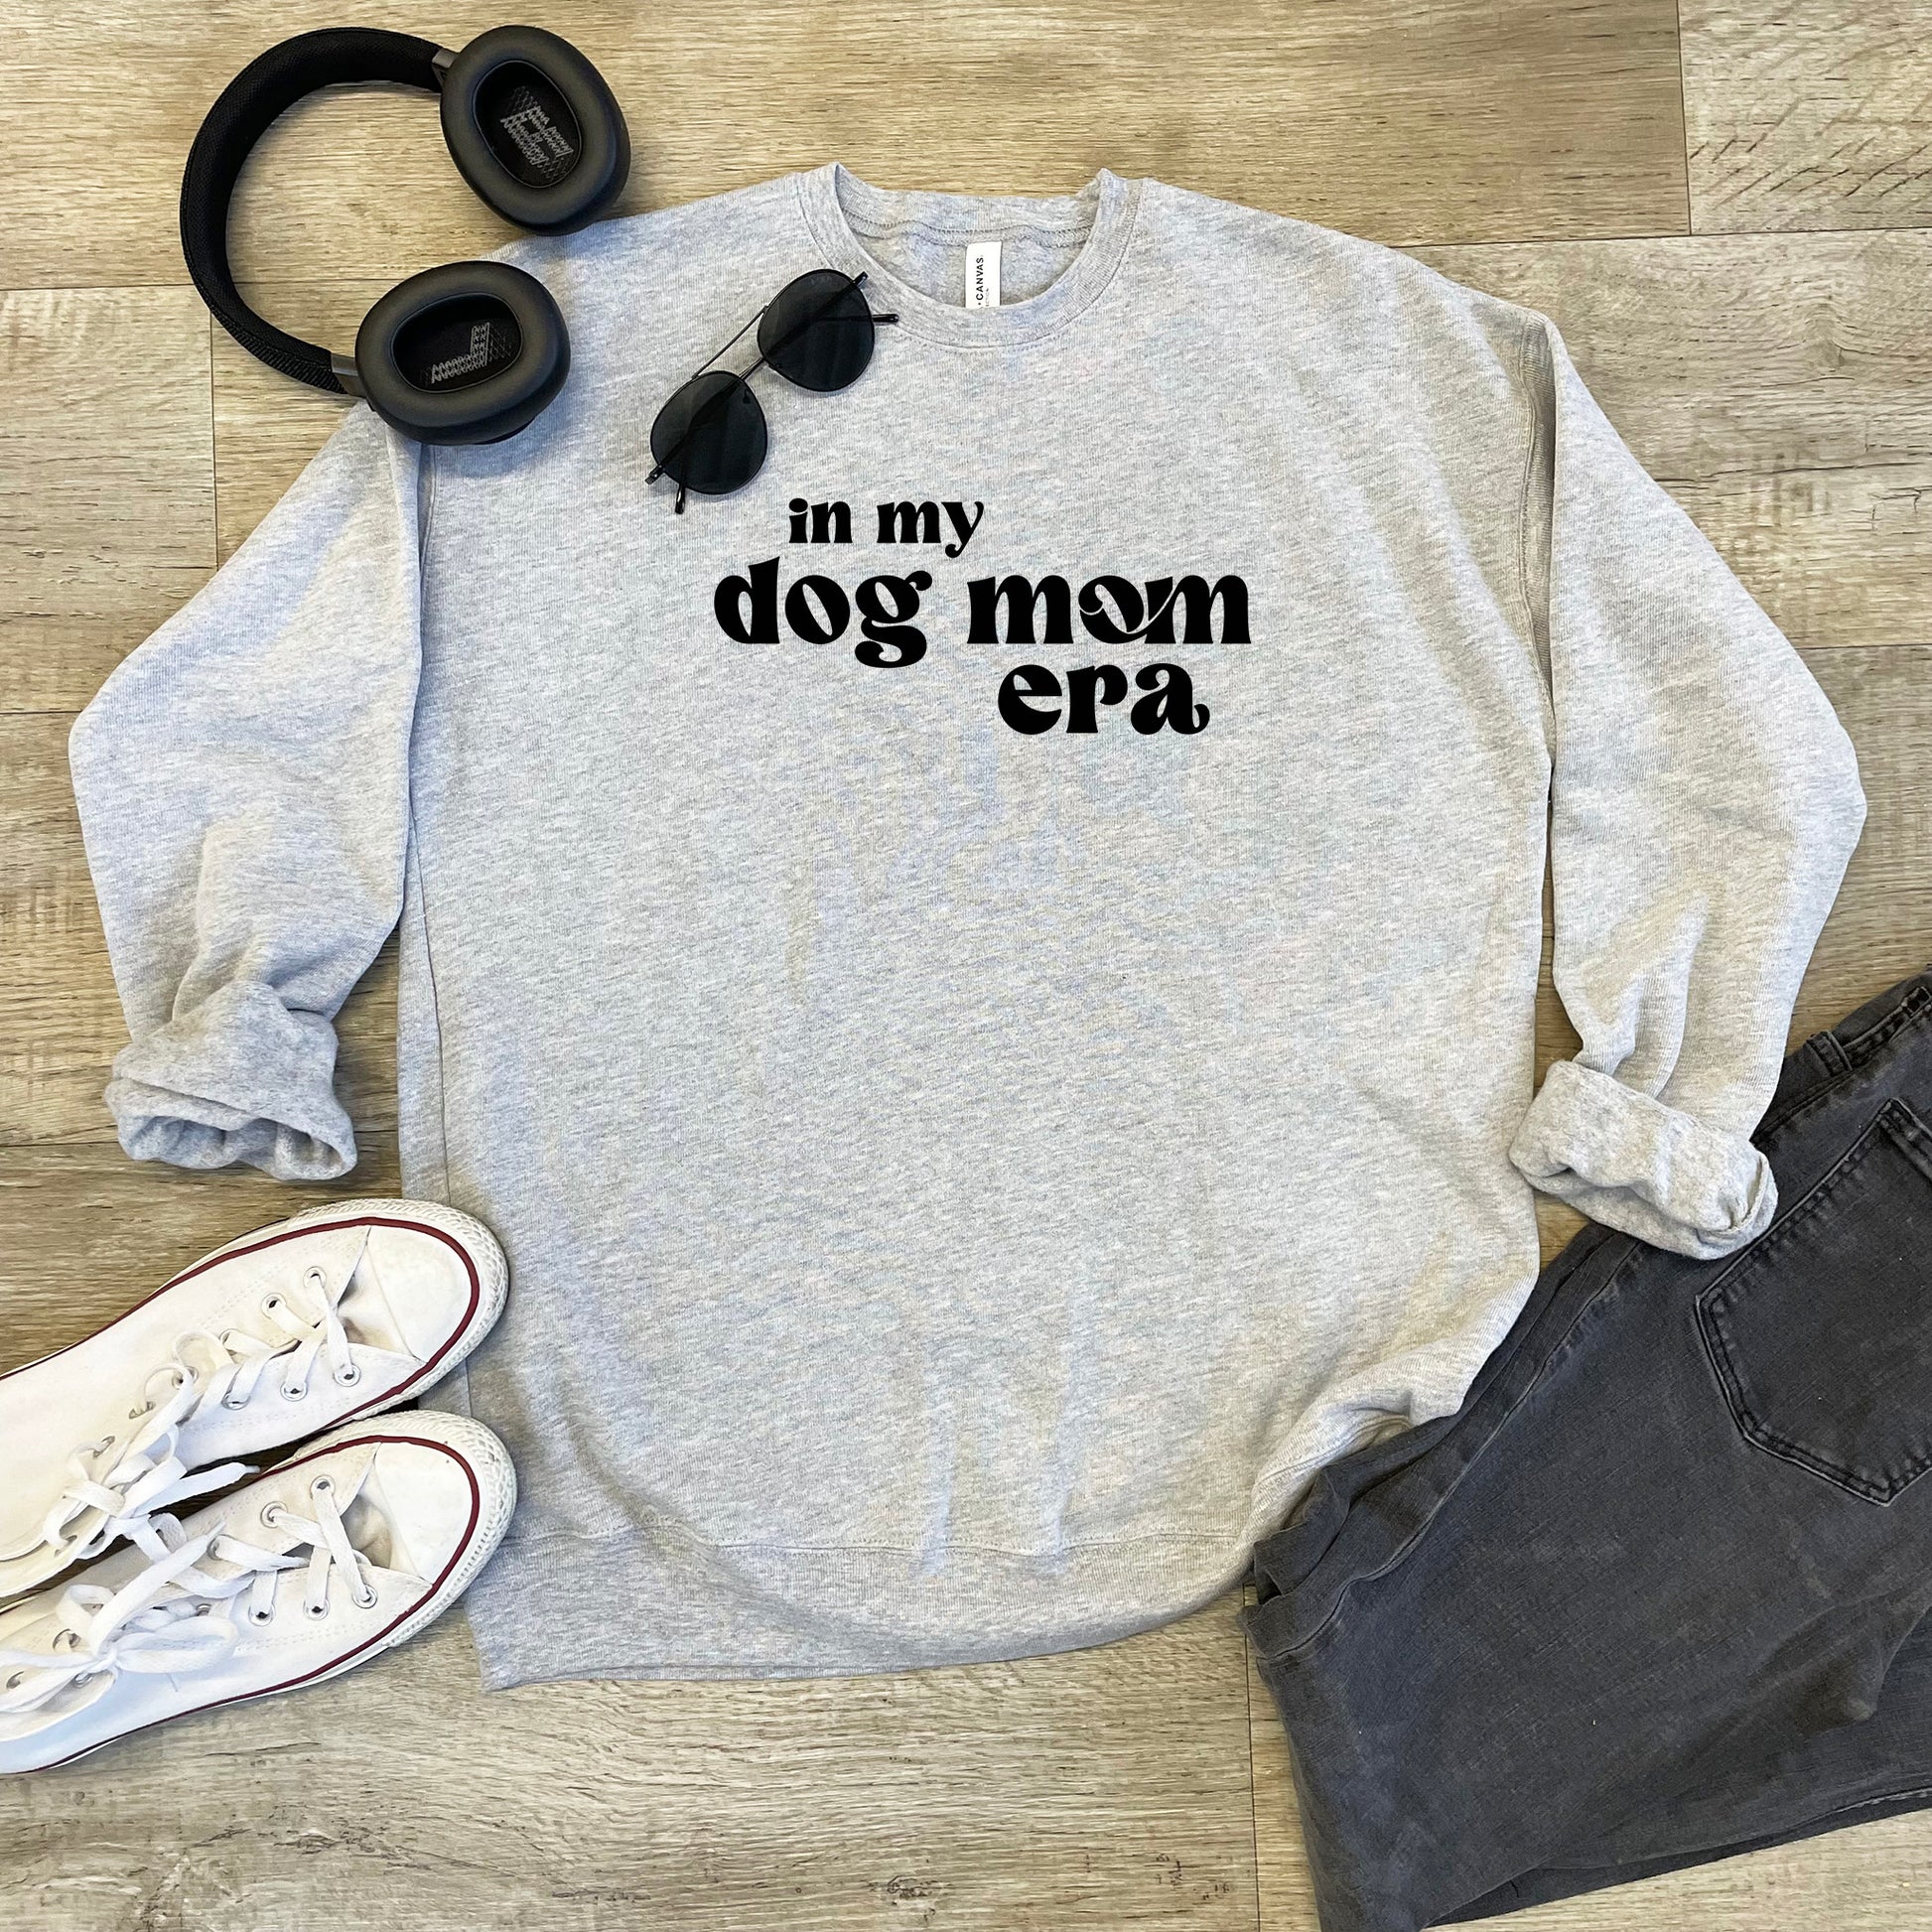 a sweatshirt that says in my dog mom era next to headphones